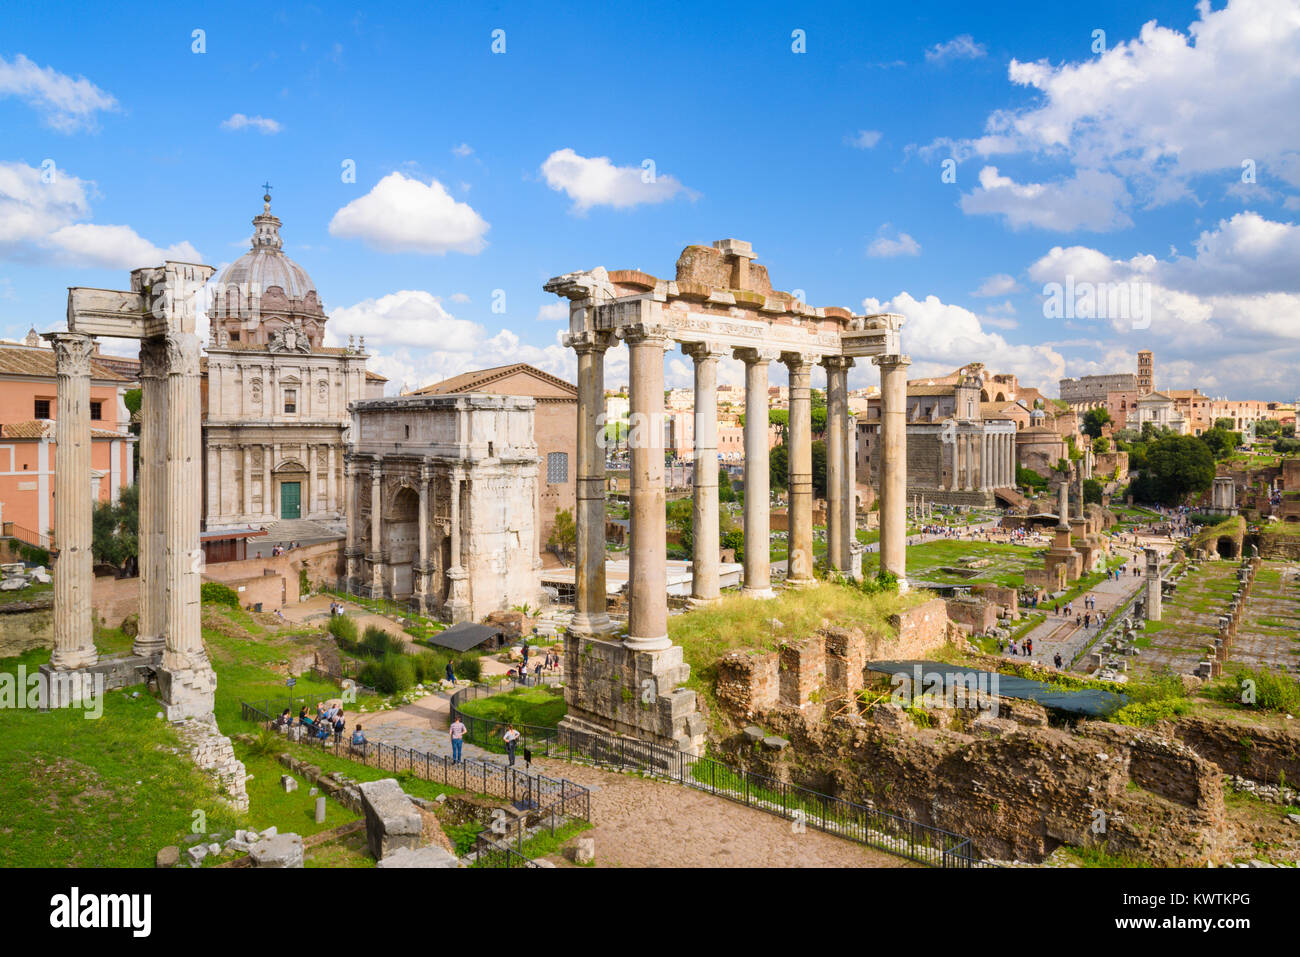 Temple de Saturne et aperçu des ruines du Forum Romain, Rome, Latium, Italie Banque D'Images